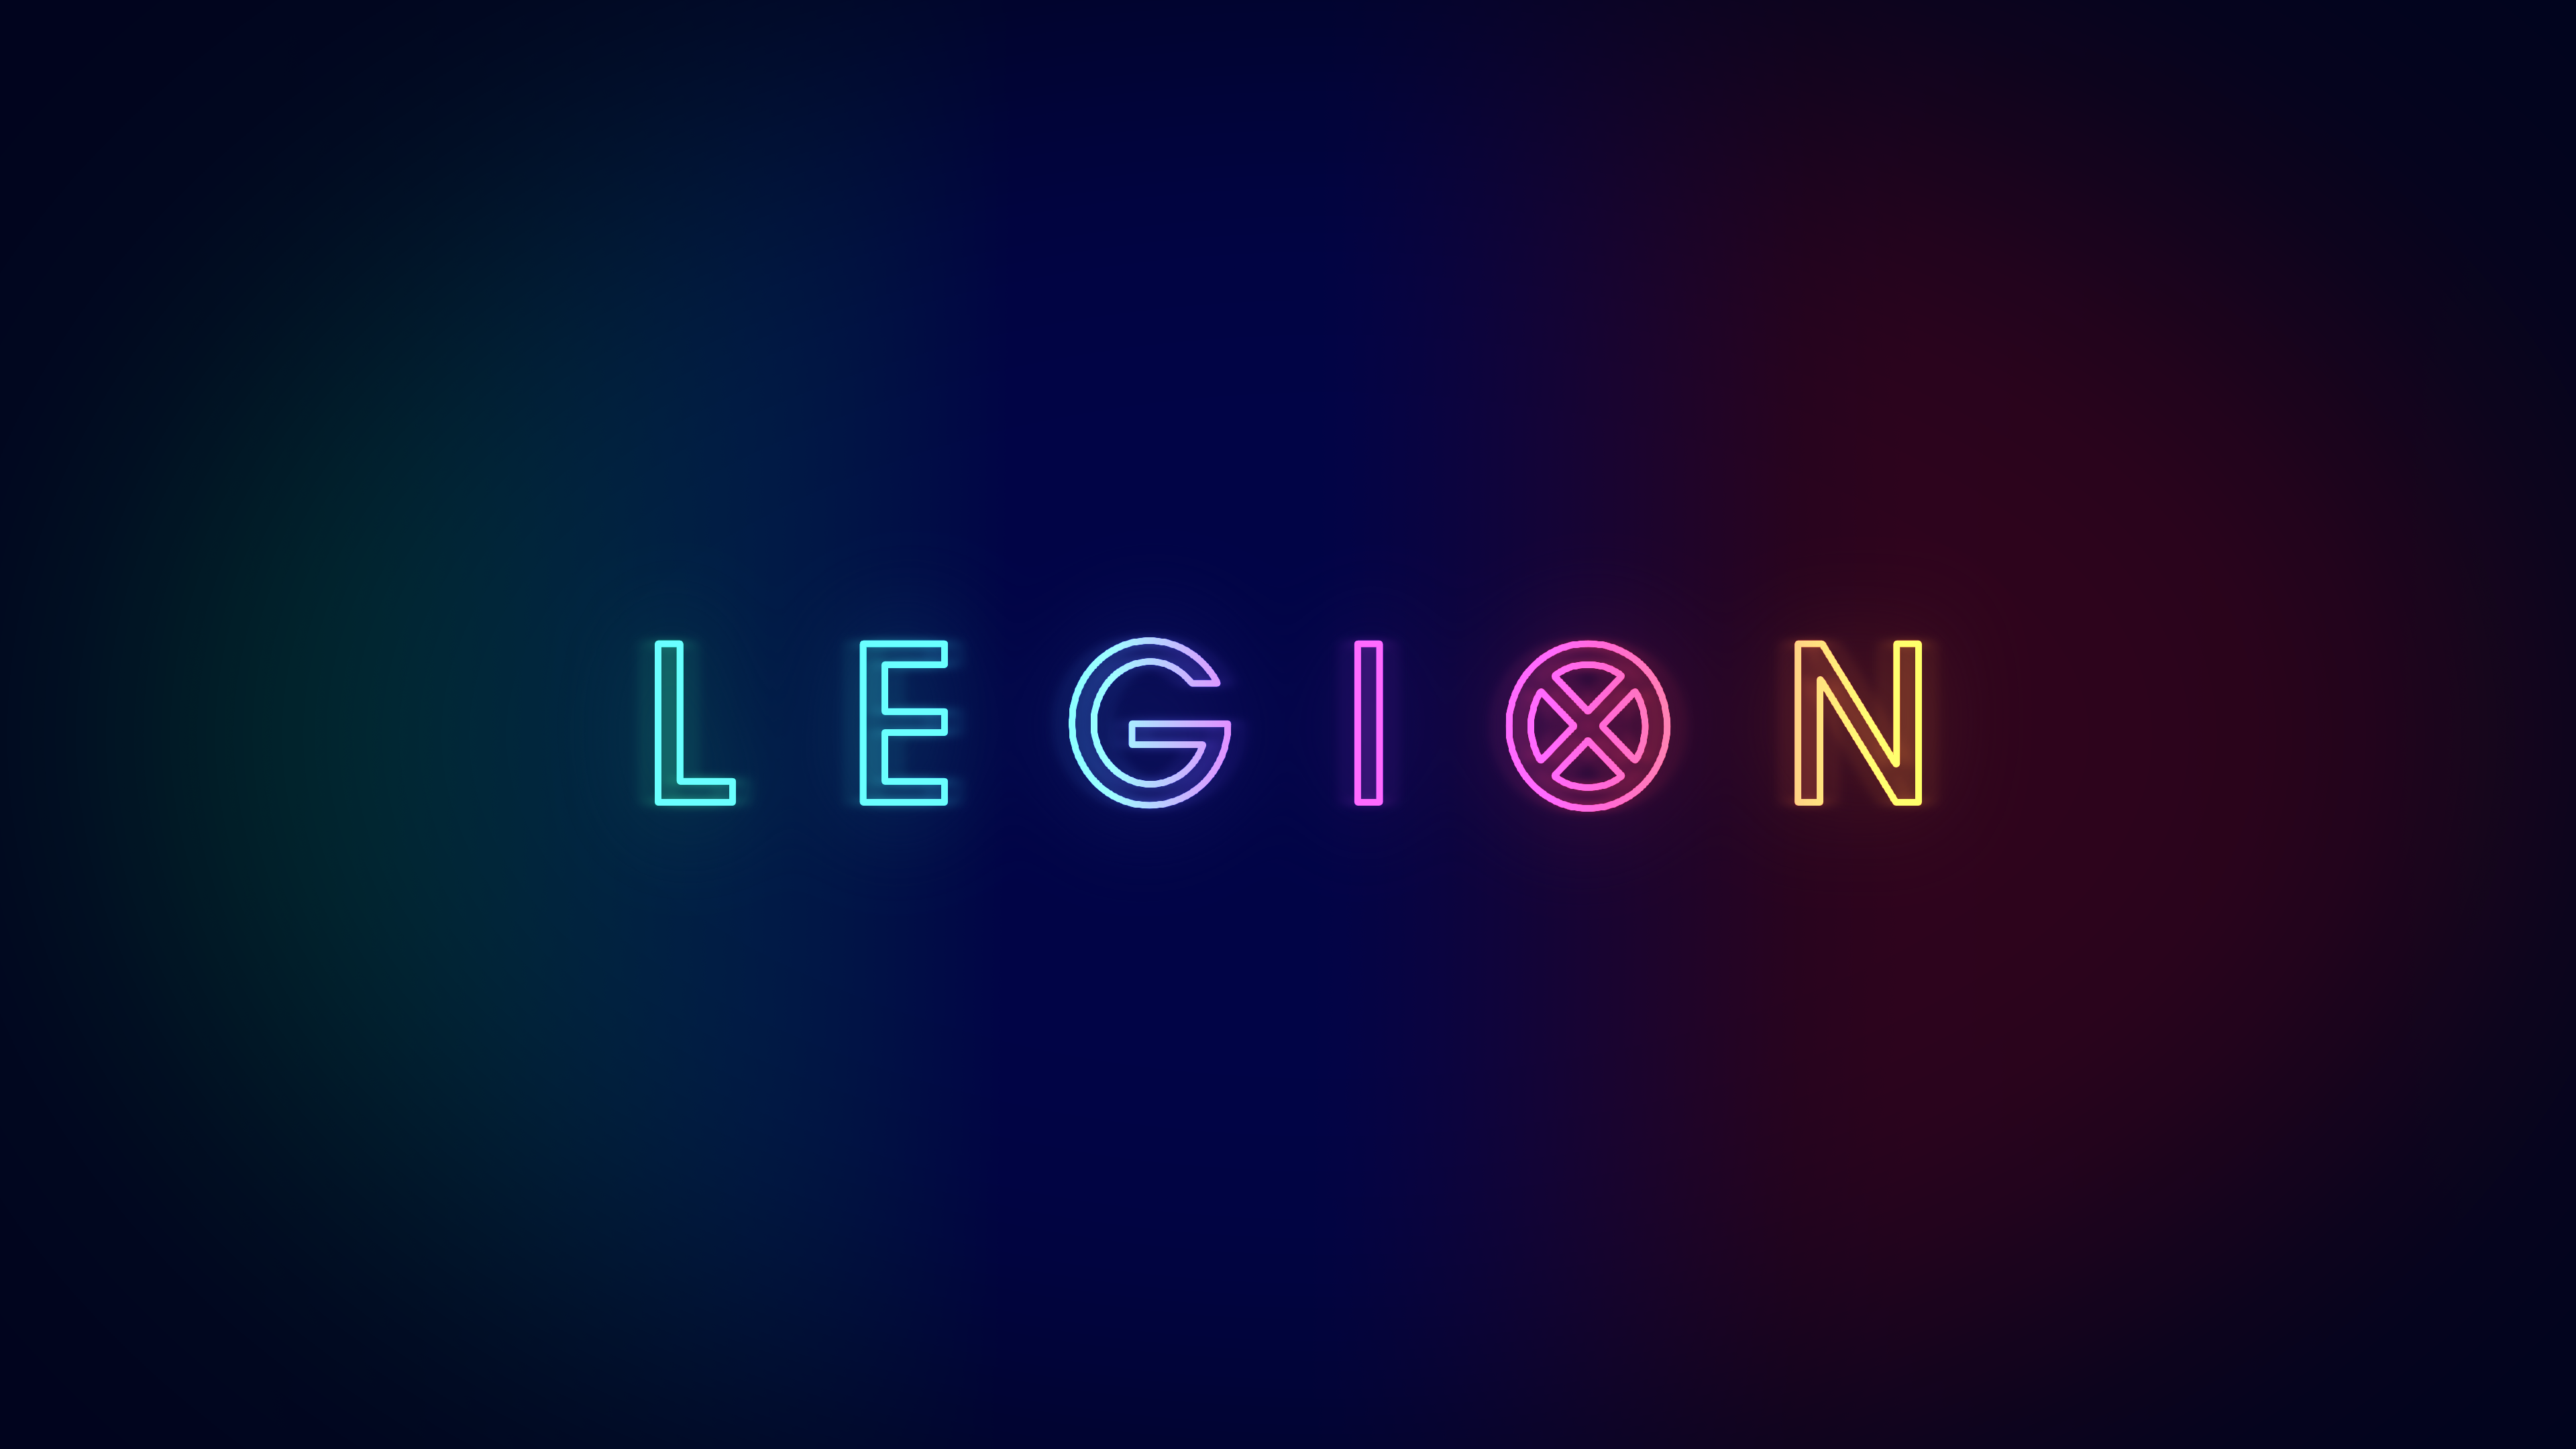 Neon Legion Wallpaper X R Legionfx